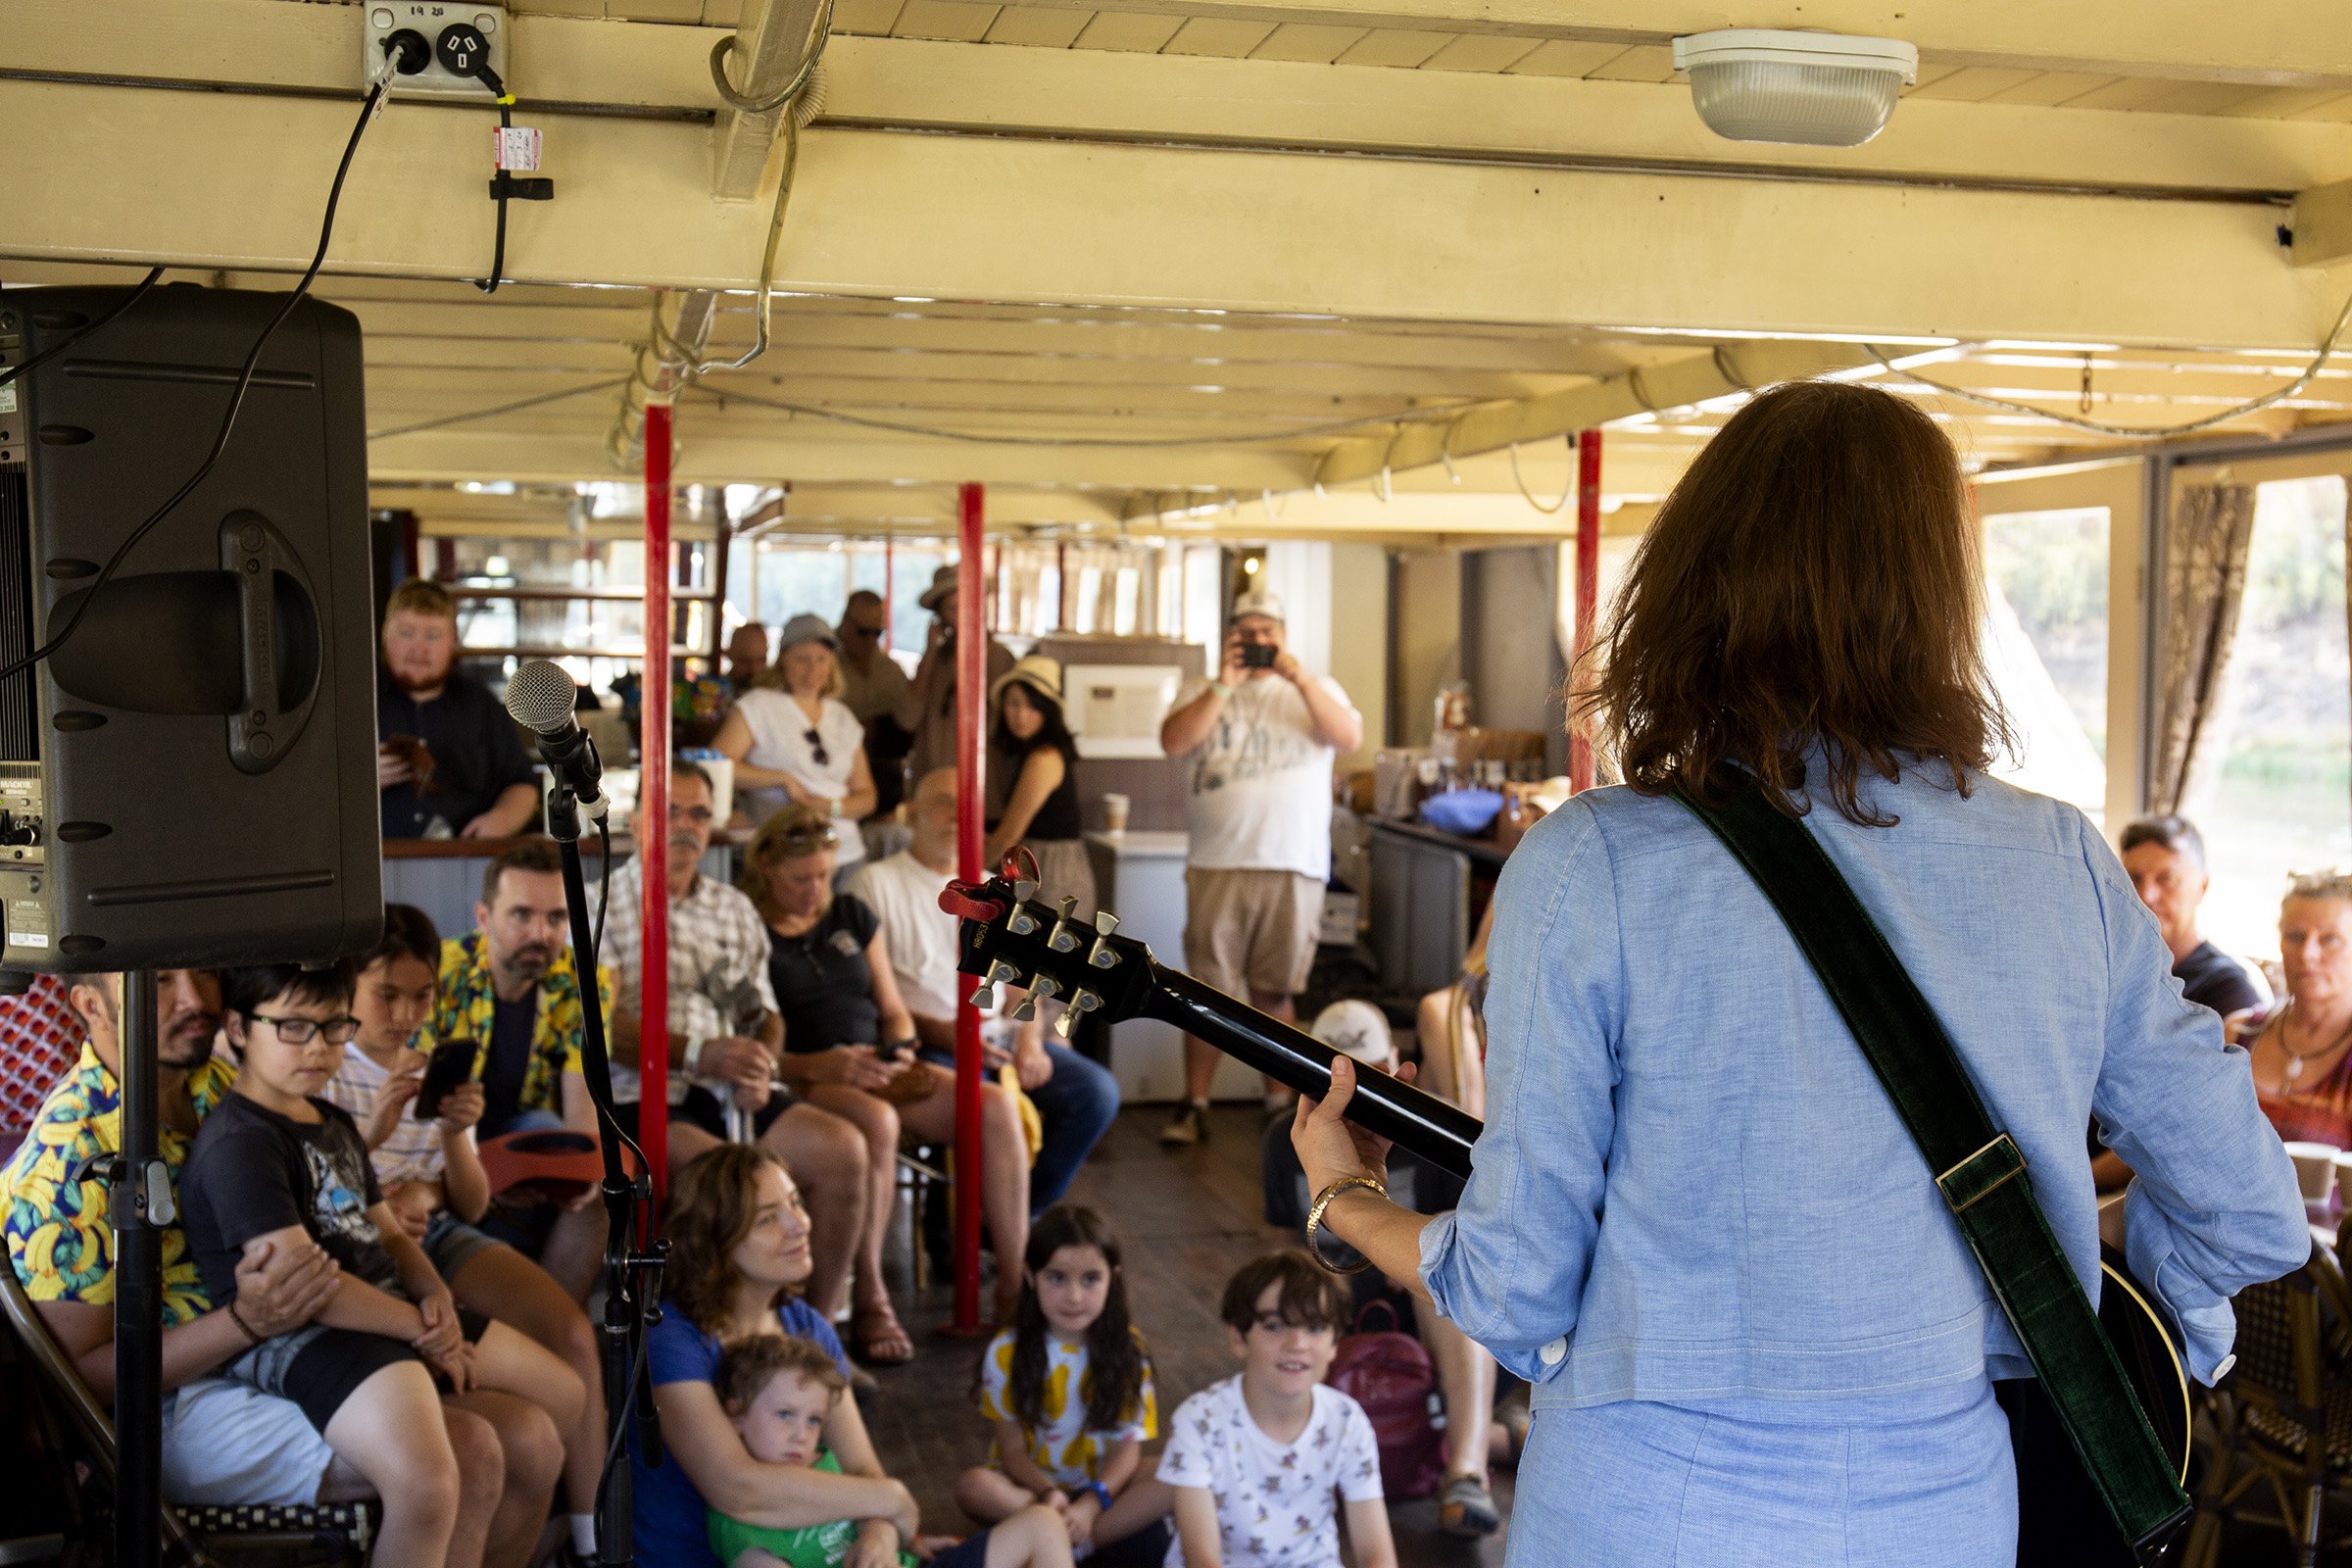 riverboat music festival taylors falls